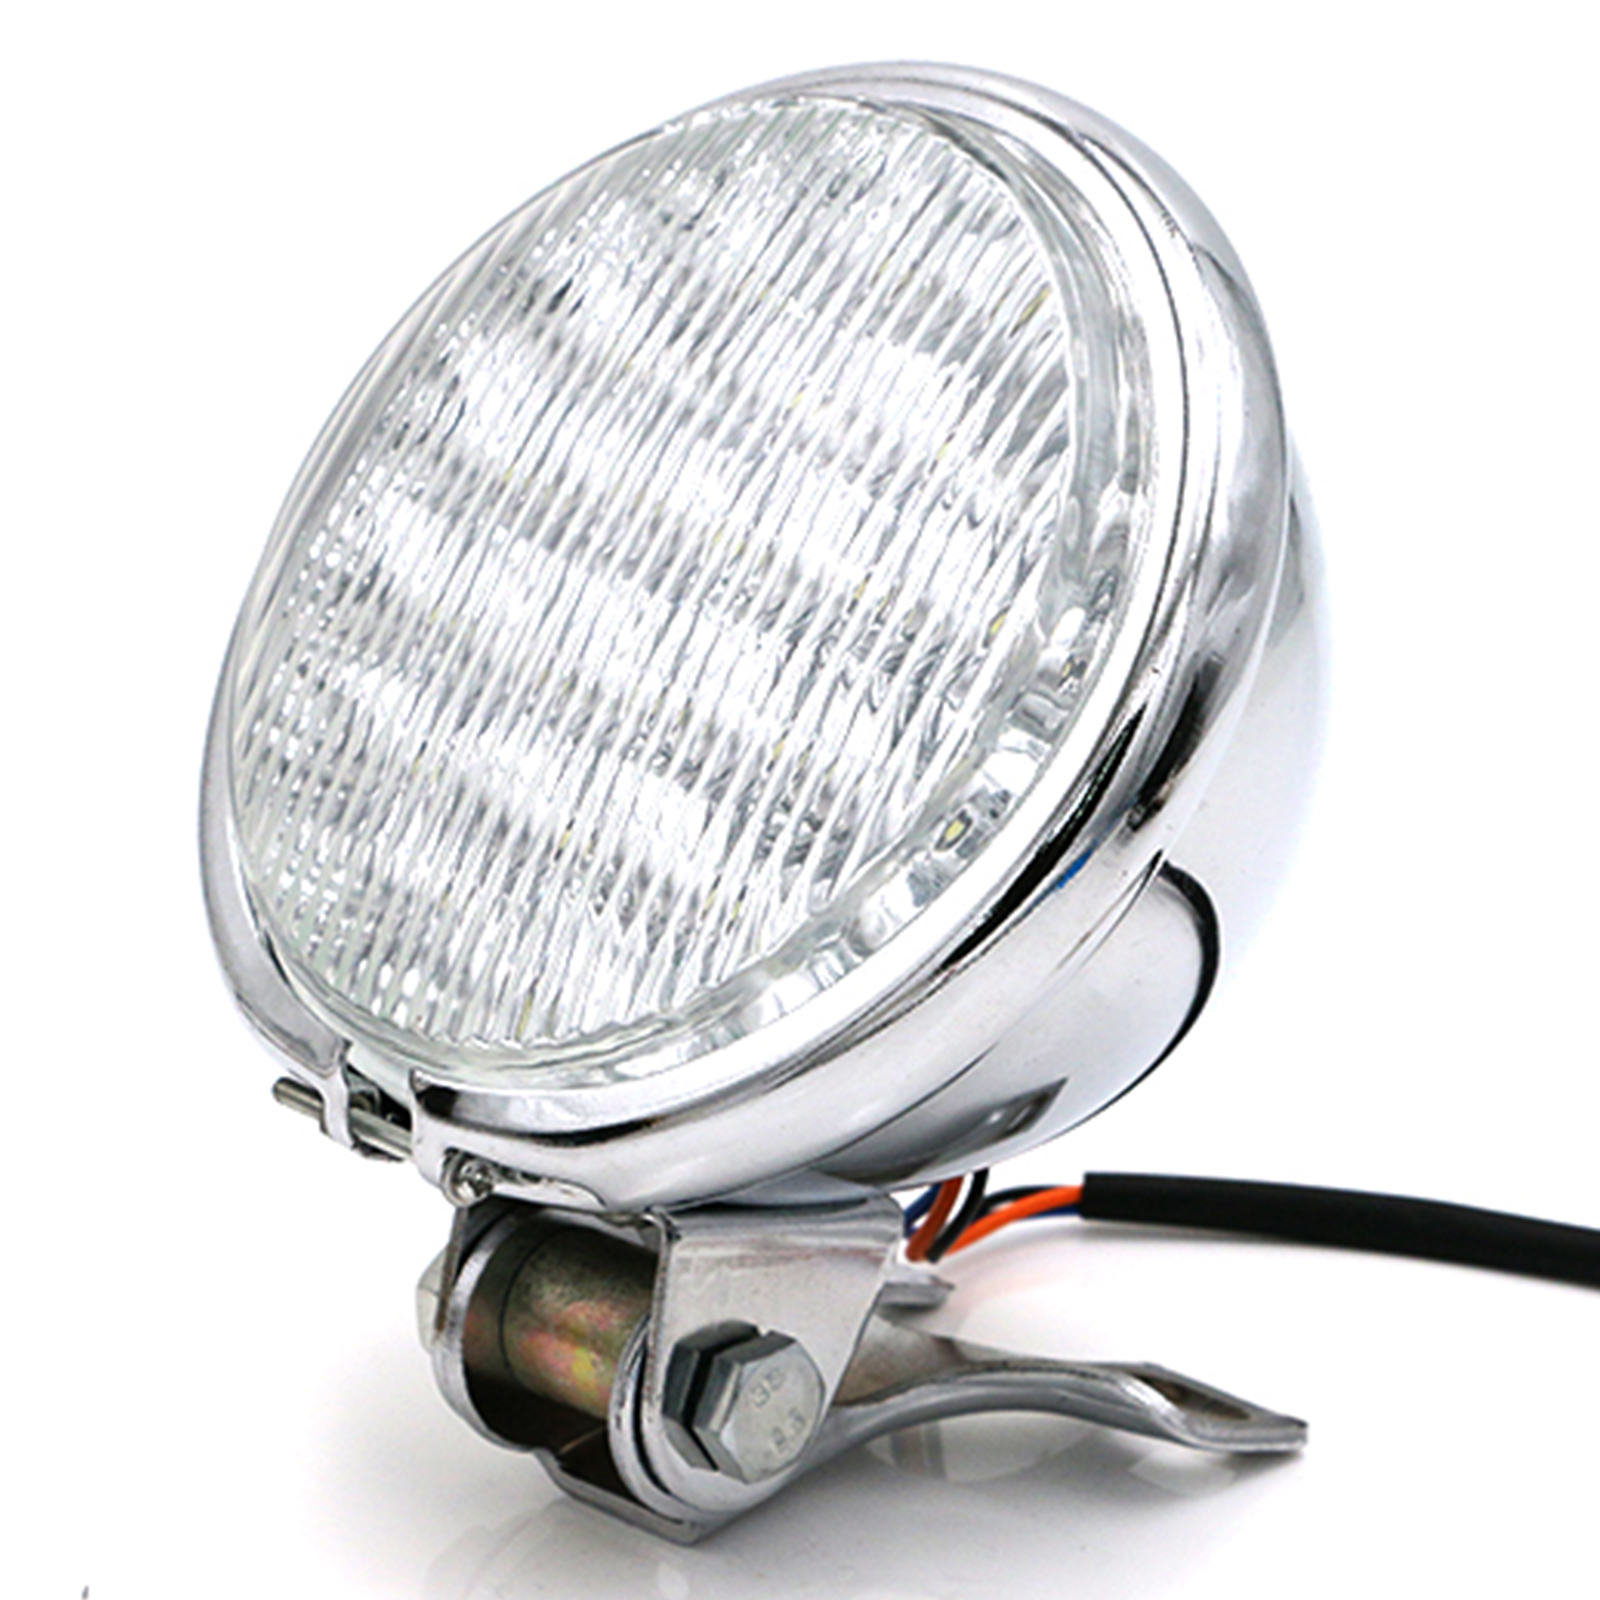 5'' Vintage LED Headlight - Chrome & Transparent